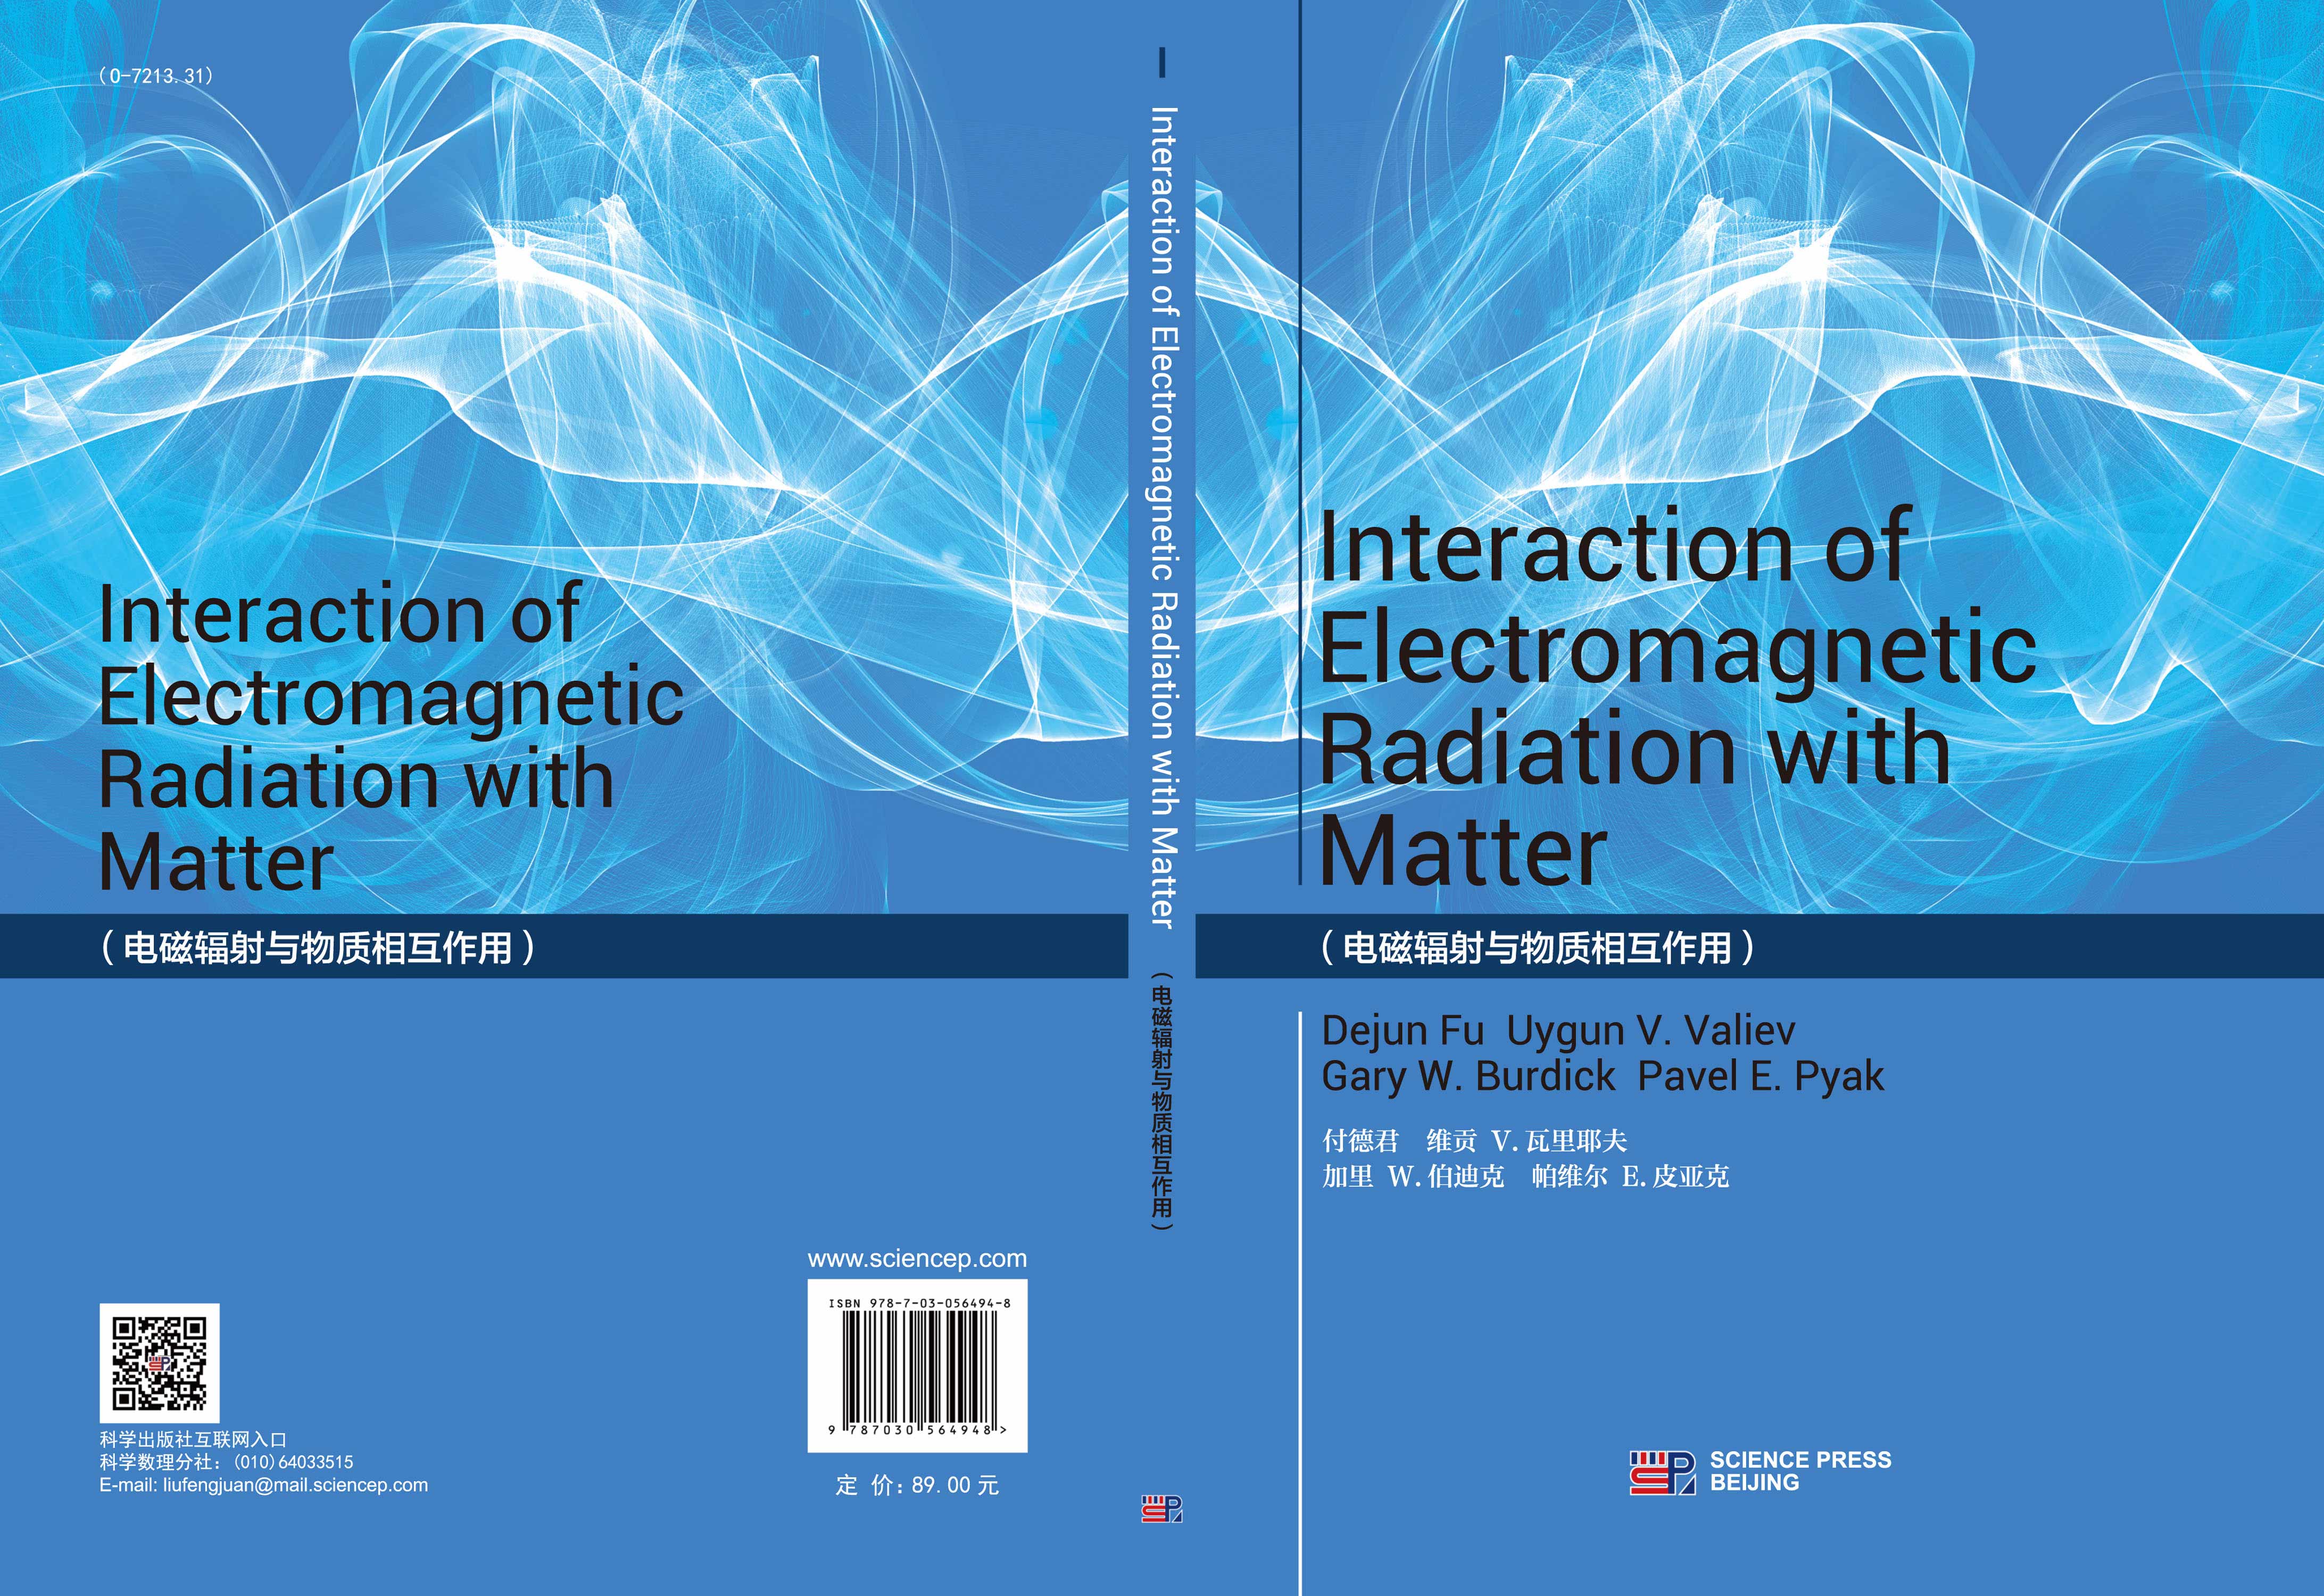 Interaction of Electromagnetic Radiation with Matter（电磁辐射与物质相互作用)）